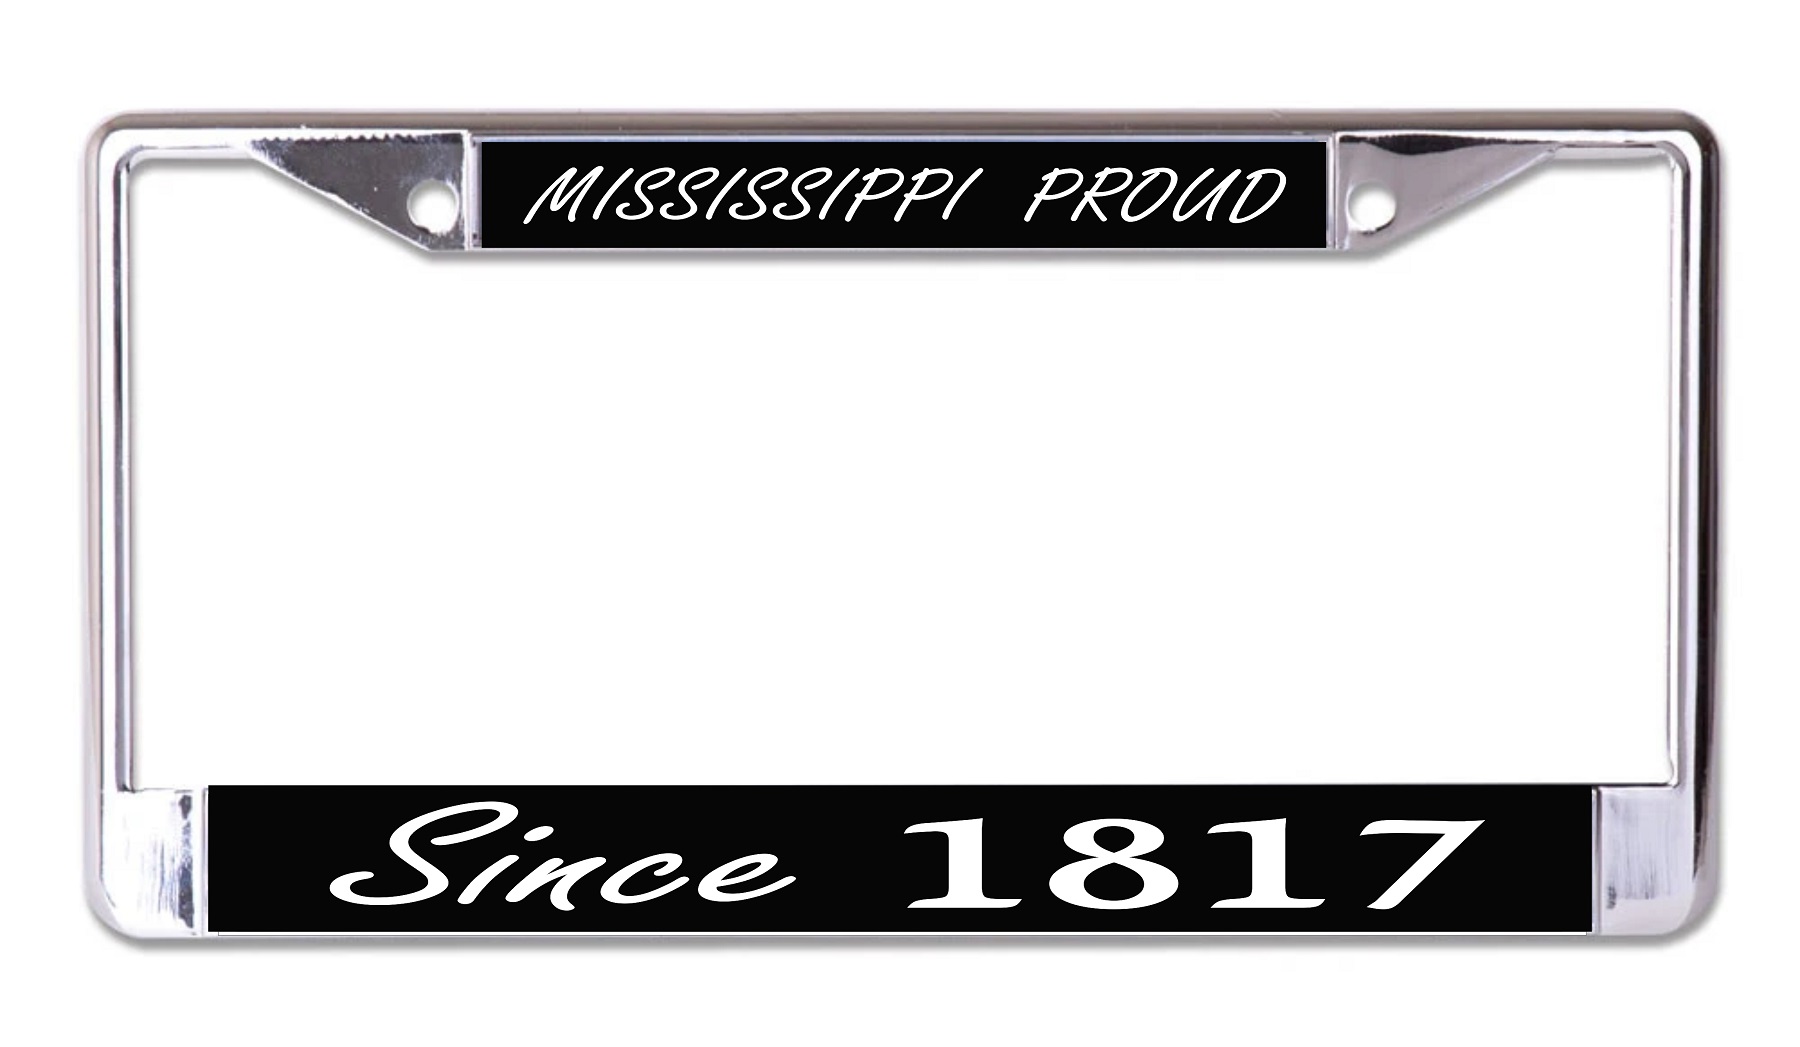 License Plates Online Mississippi Proud Since 1817 Chrome License Plate Frame